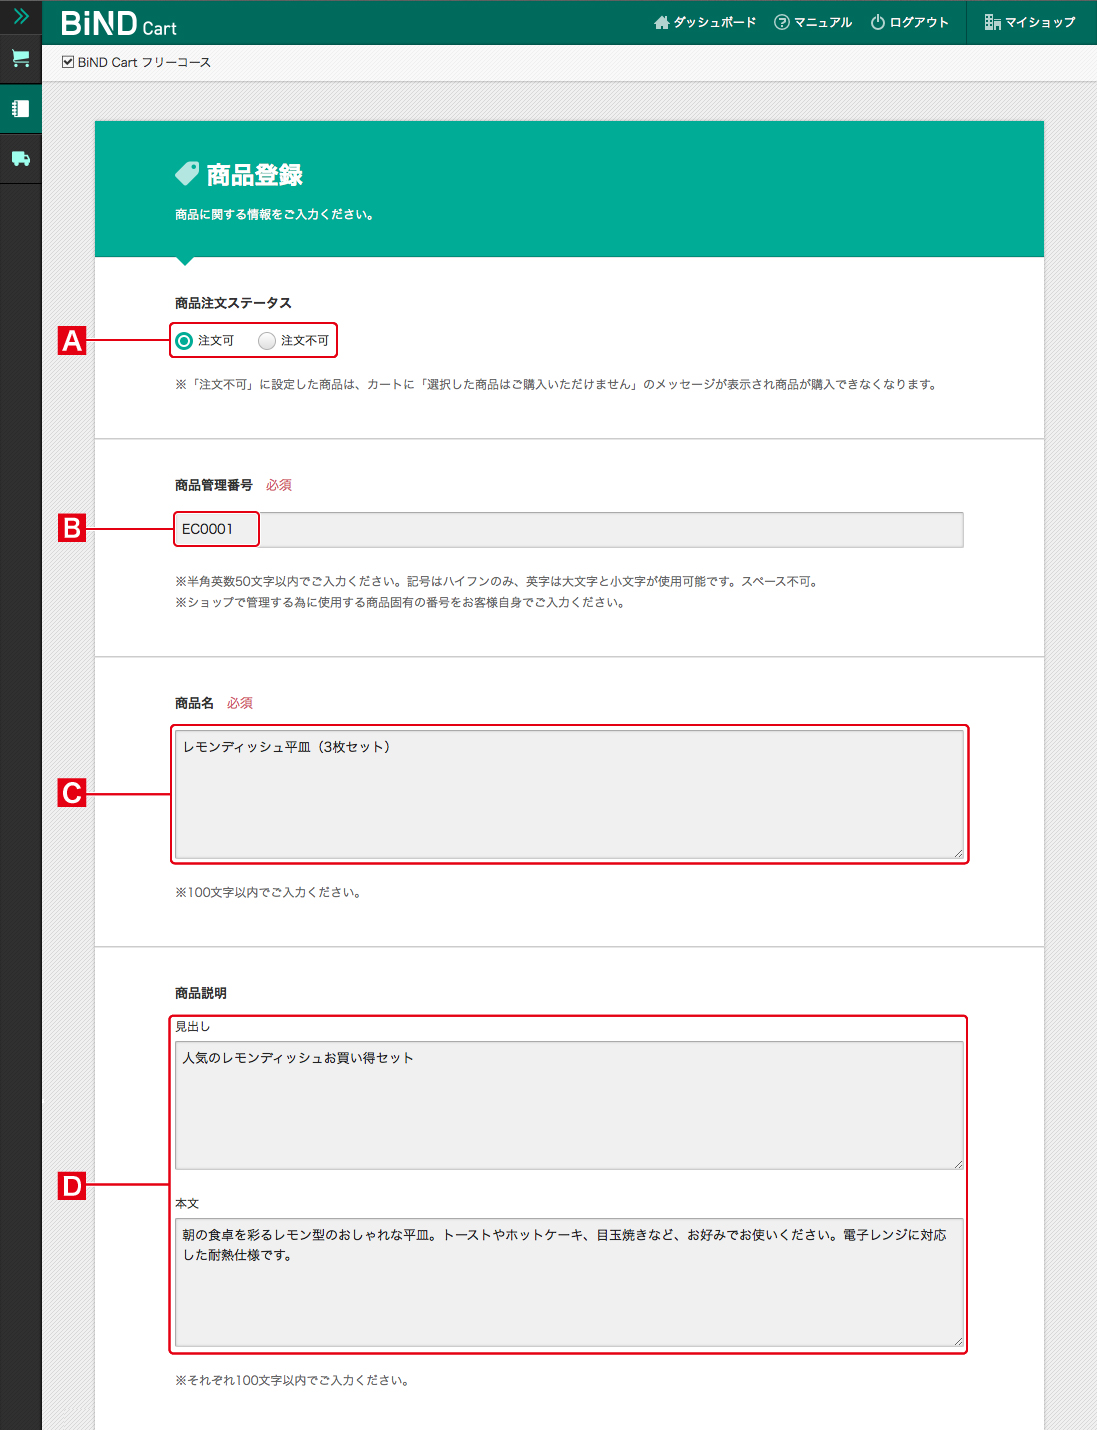 http://www.digitalstage.jp/support/bindcart/manual/fc4-2_04c.jpg